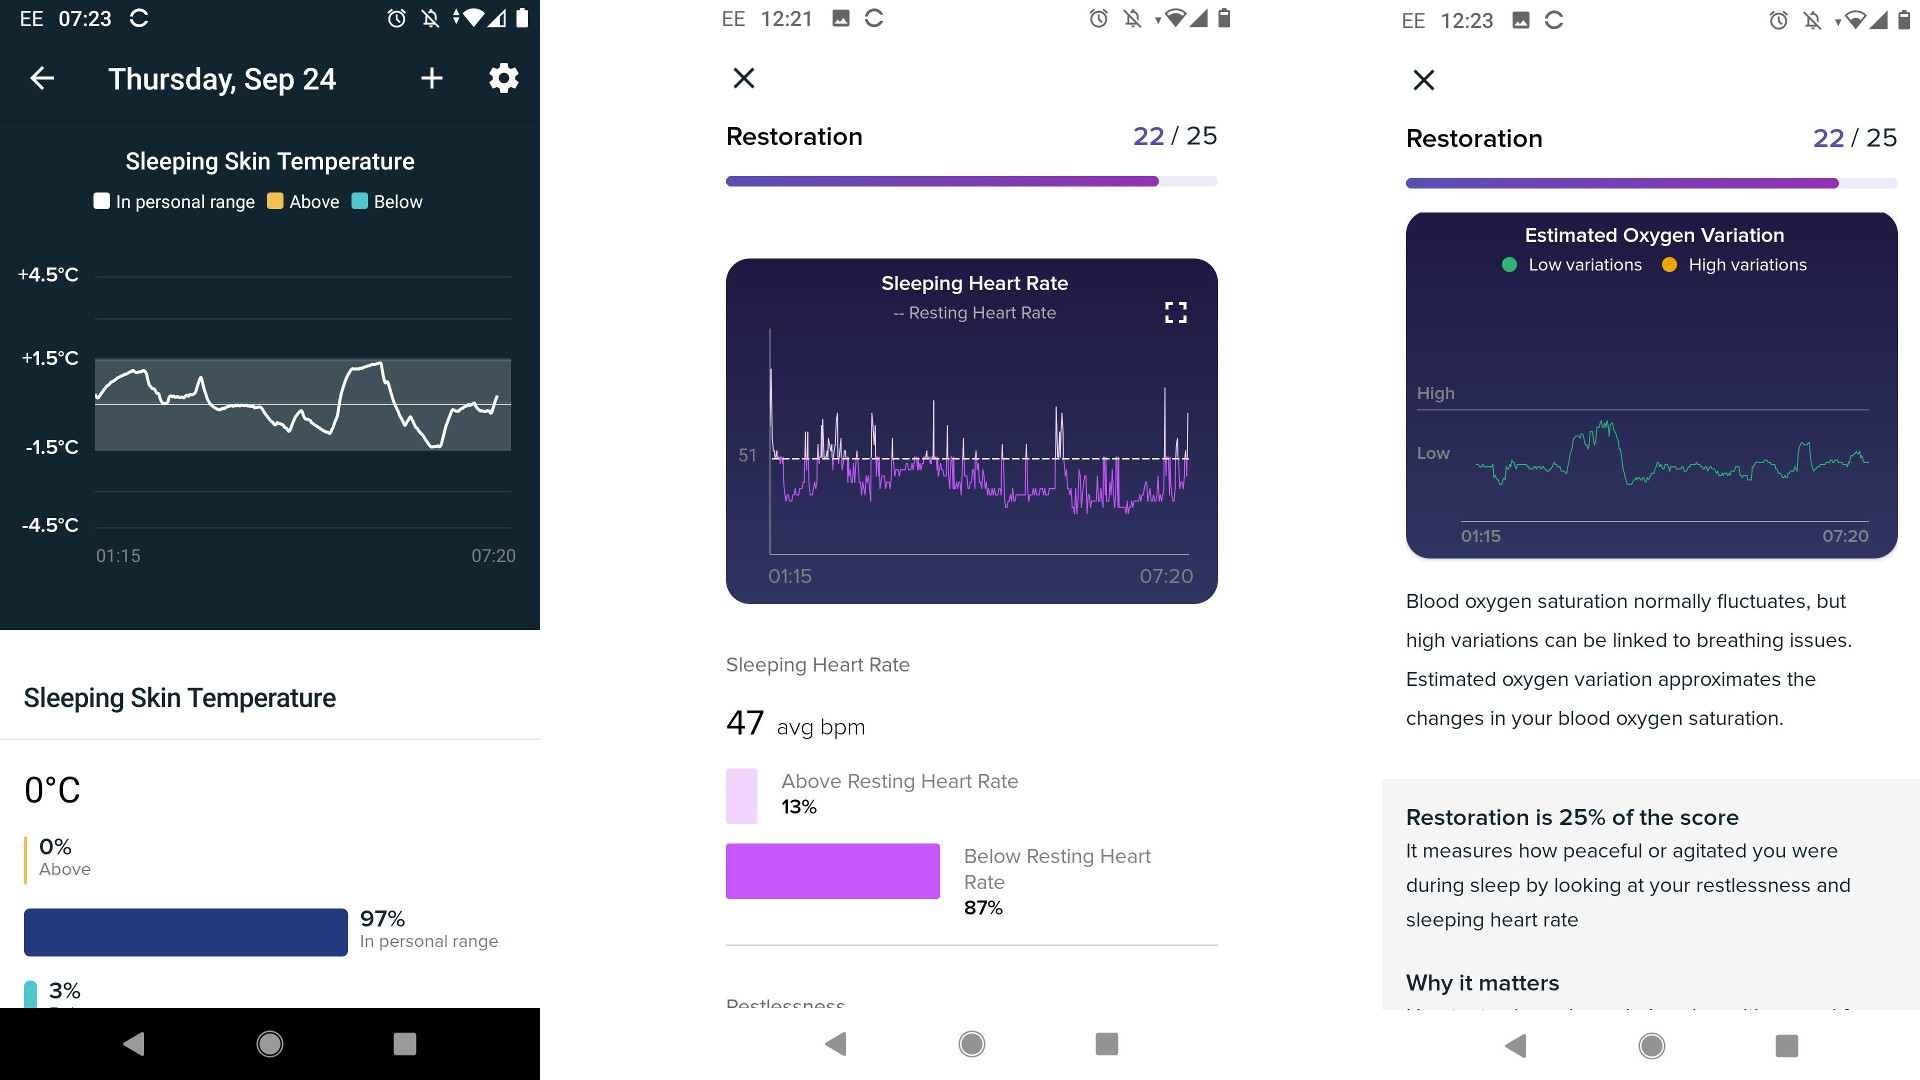 Sleep tracking metrics in the Fitbit app